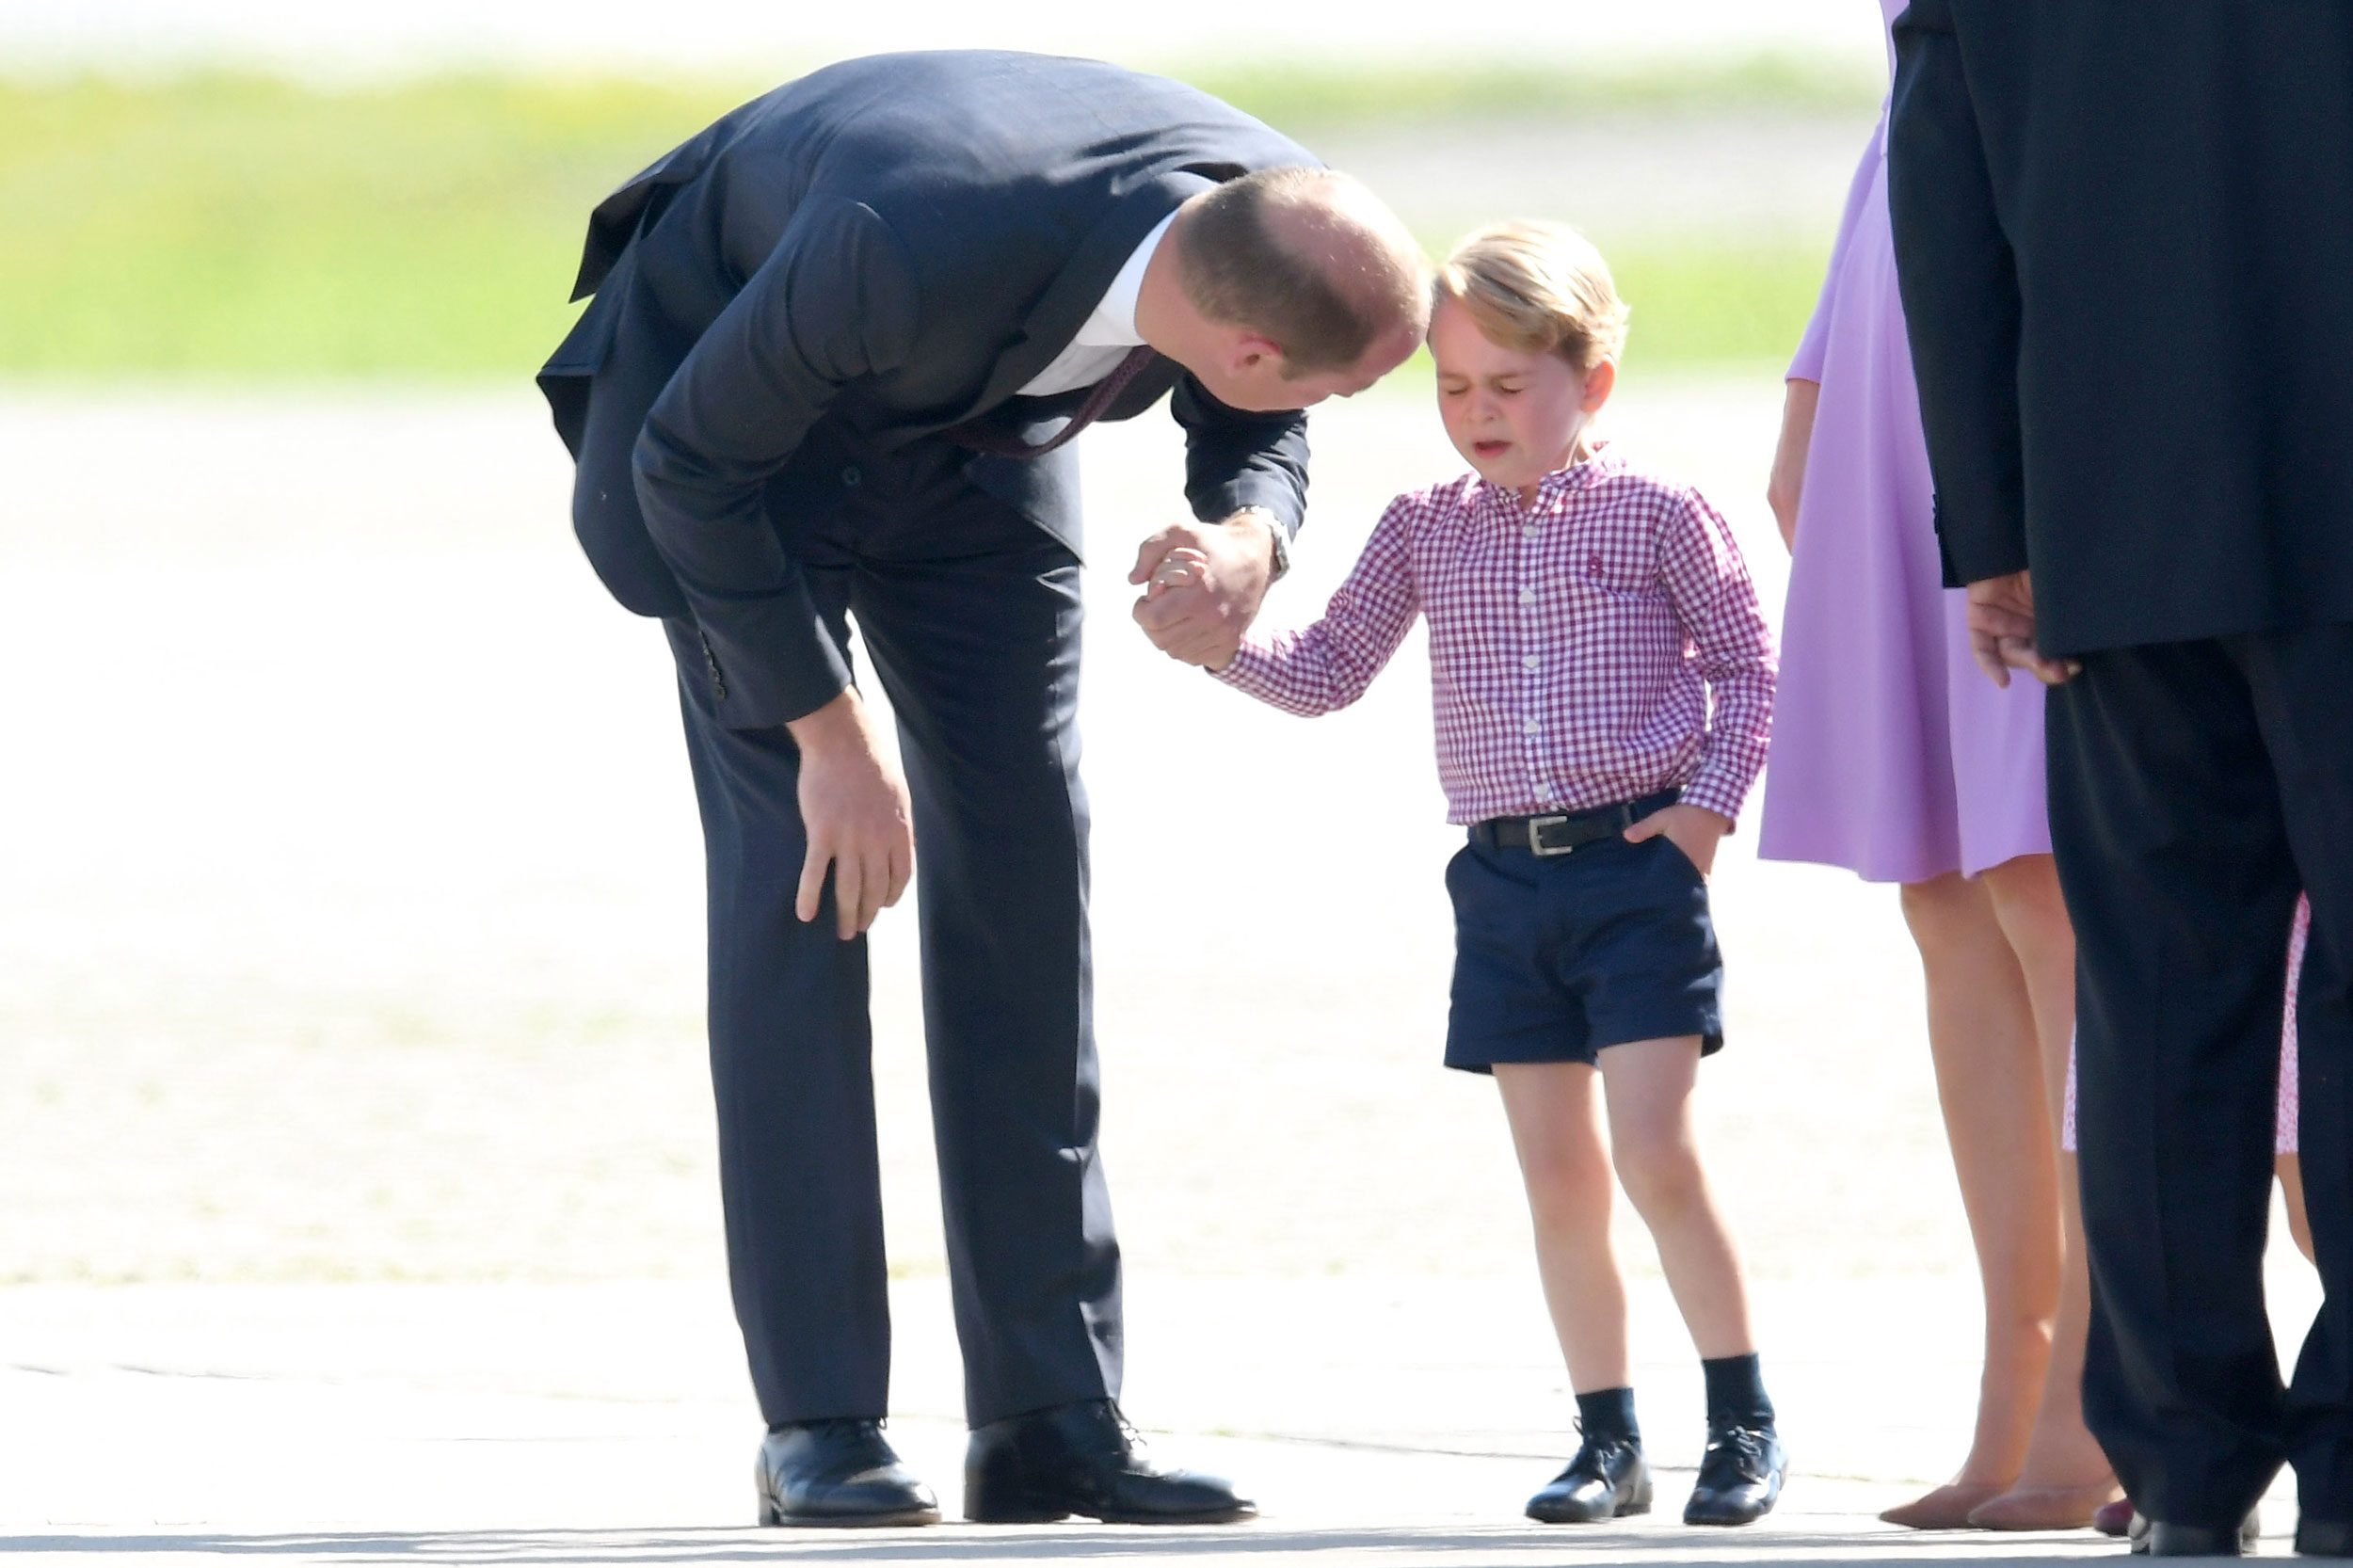 Prince George of Cambridge and Prince William, Duke of Cambridge